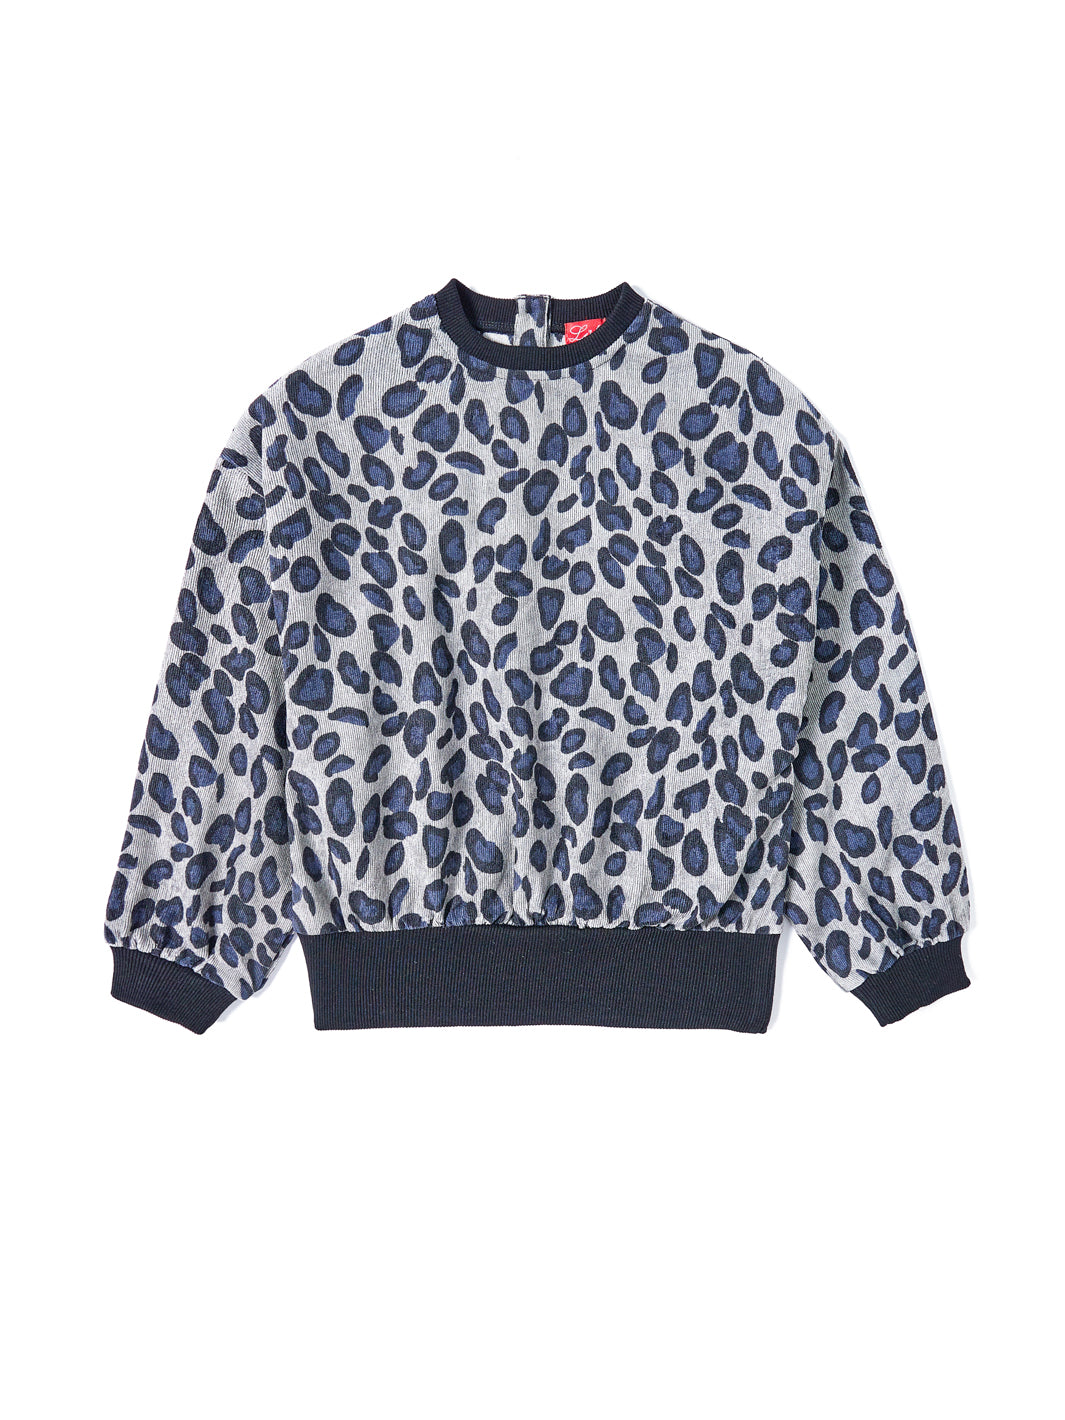 Leopard Corduroy Top - Blue/Grey